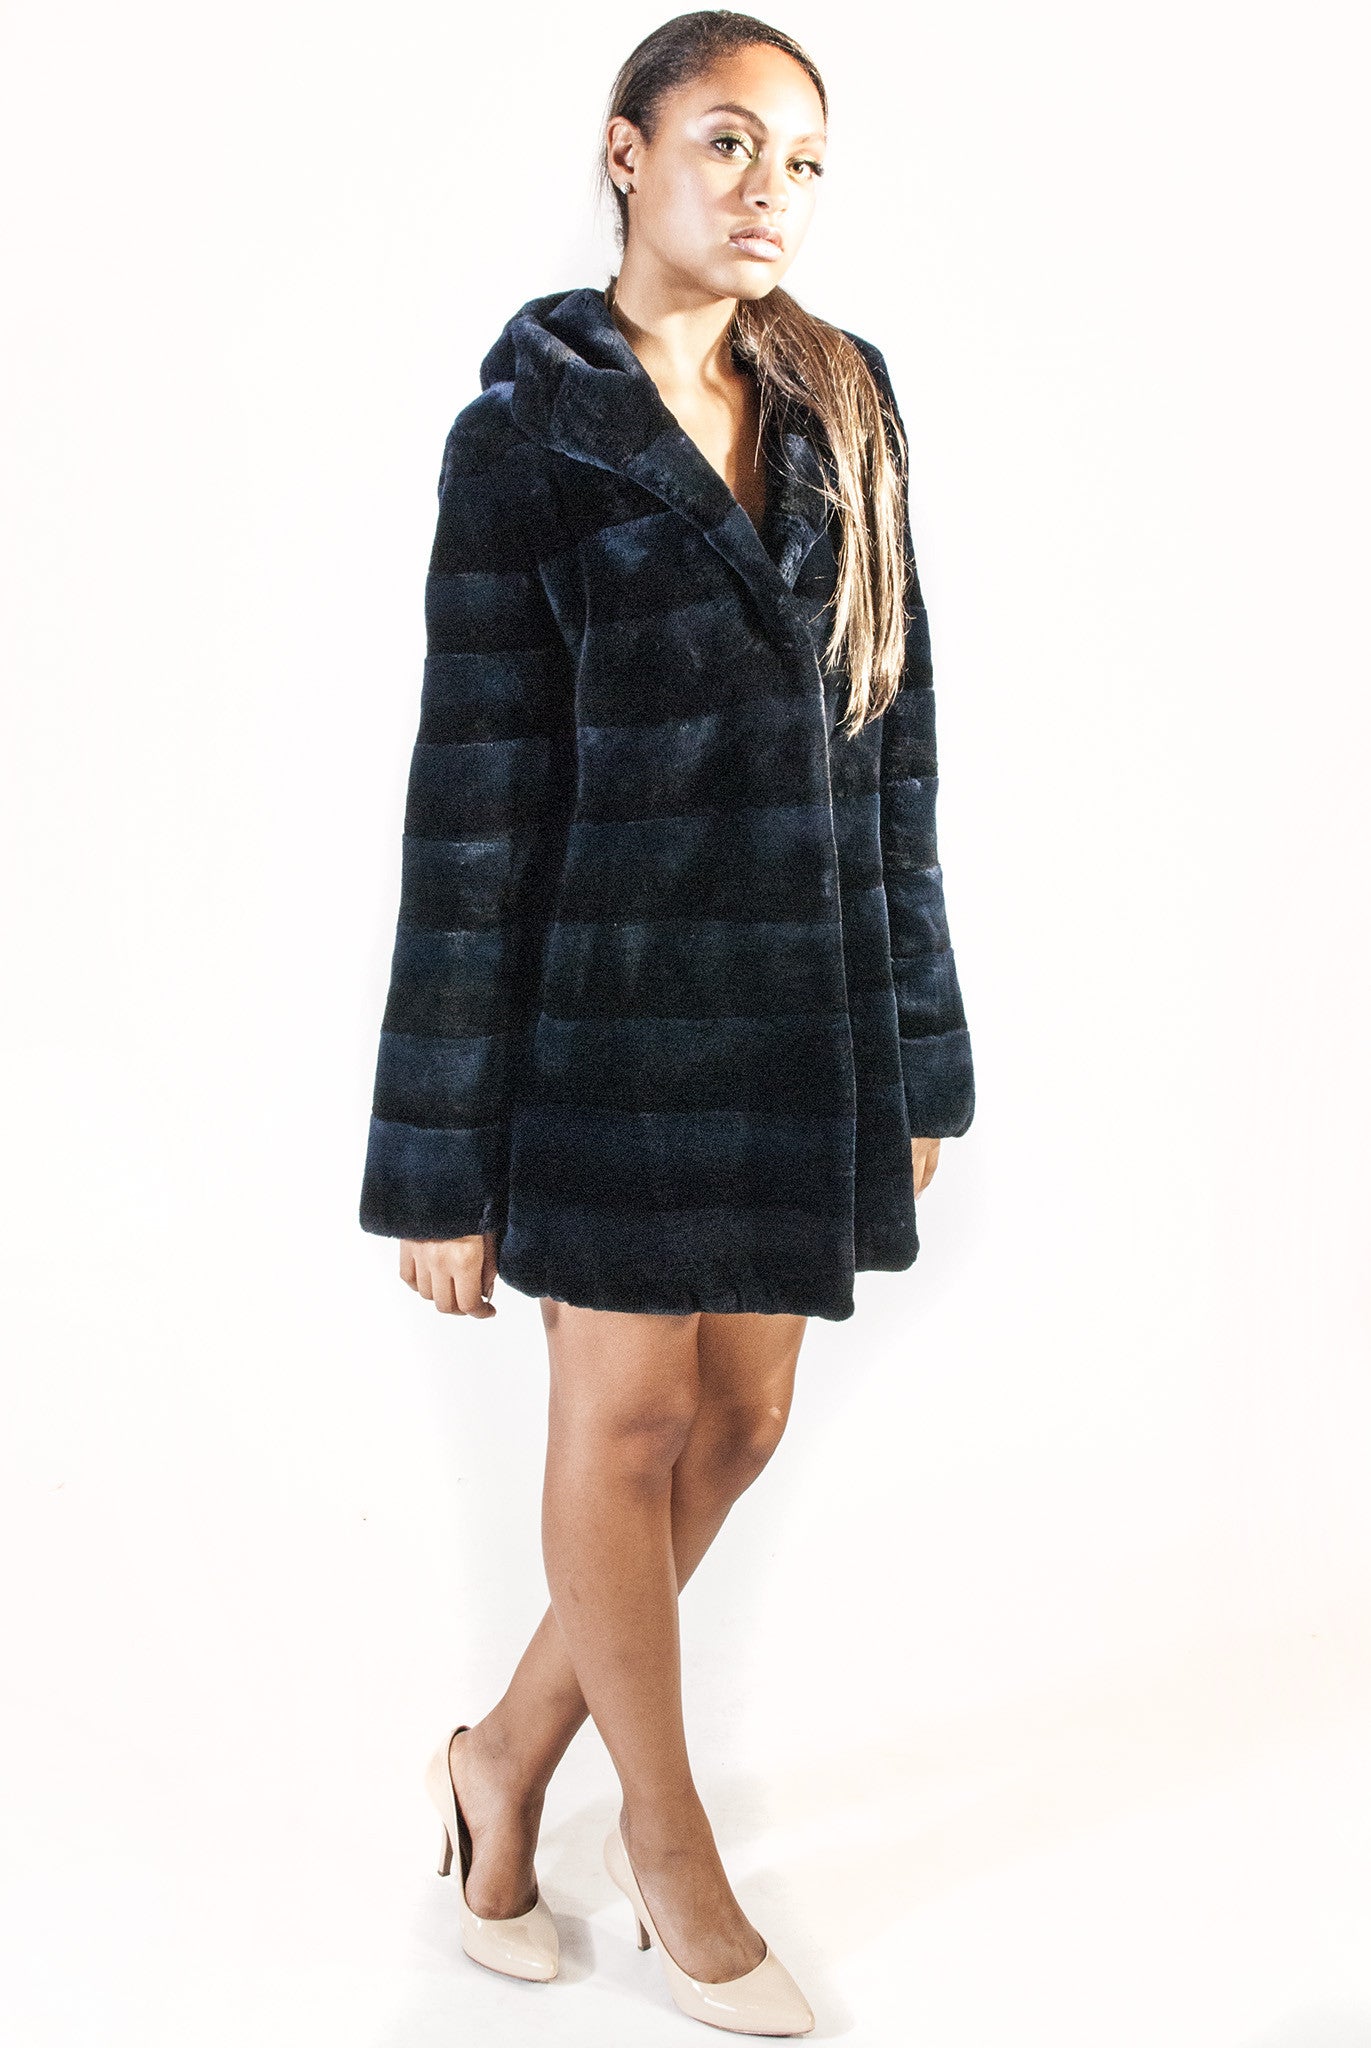 Short Blue-Black Horizontal Sheared Beaver Coat with Hood - alexandros-furs